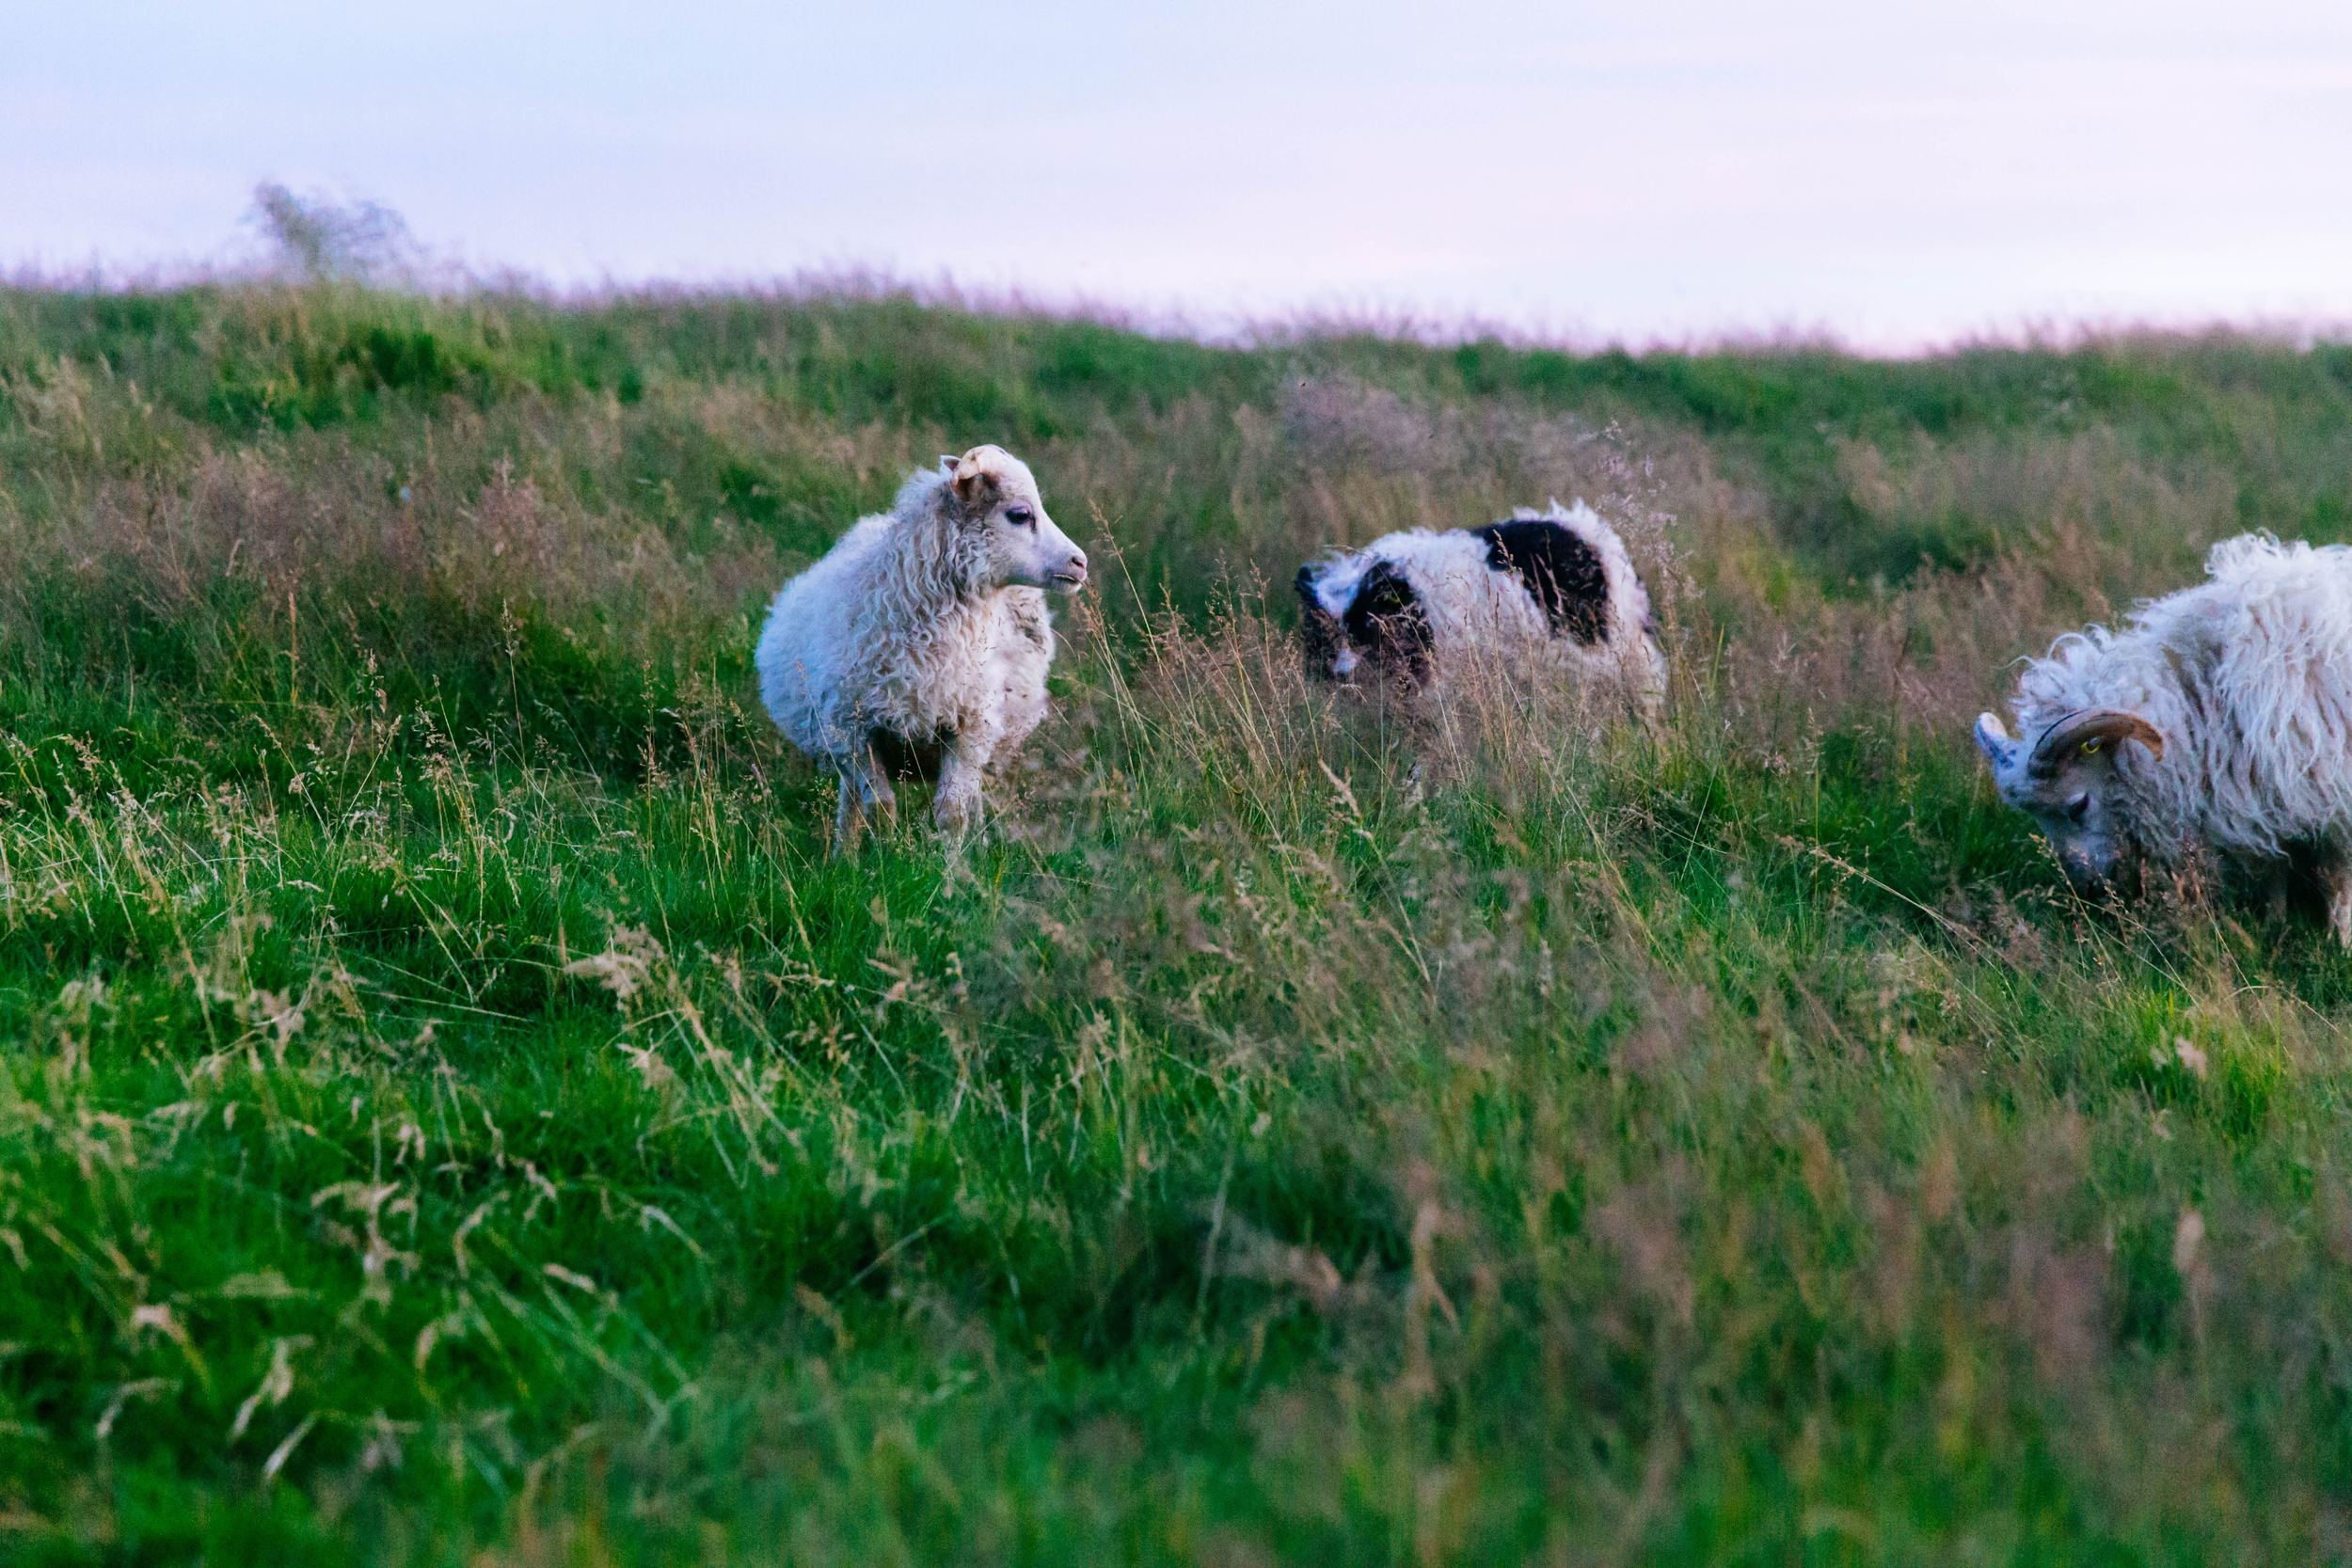 Sheep in Field - Guardian Dogs' Job